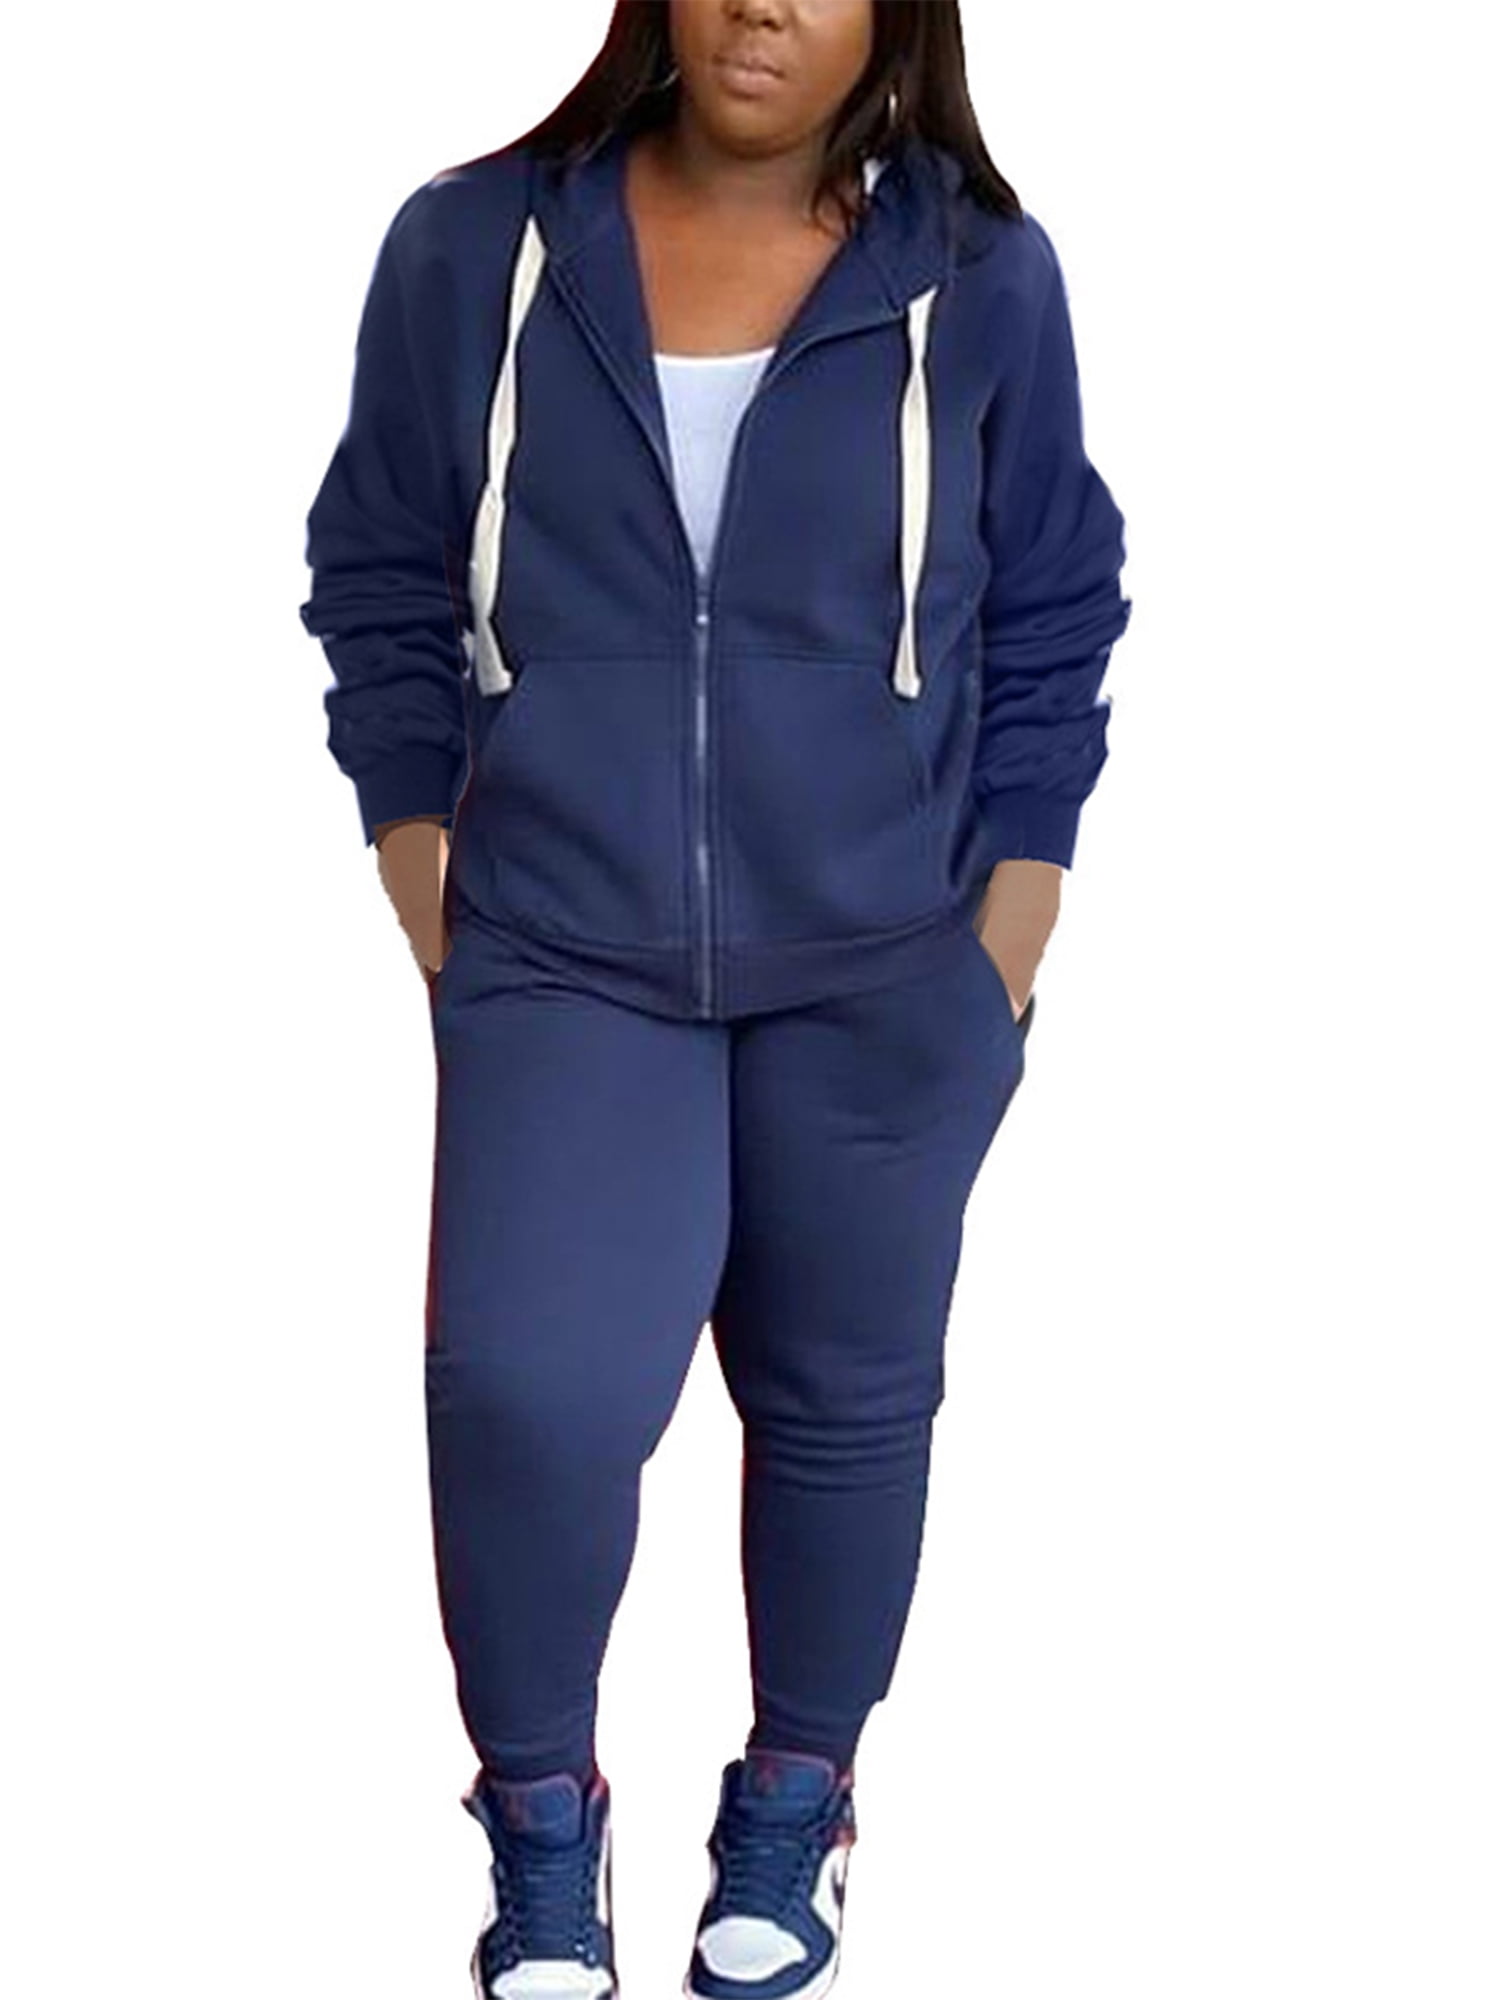 Cindysus Women Two Piece Outfit Plus Size Sweatsuit Hoodie Jogger Set  Casual Jogging Long Sleeve Tracksuit Sets Navy Blue 4XL 